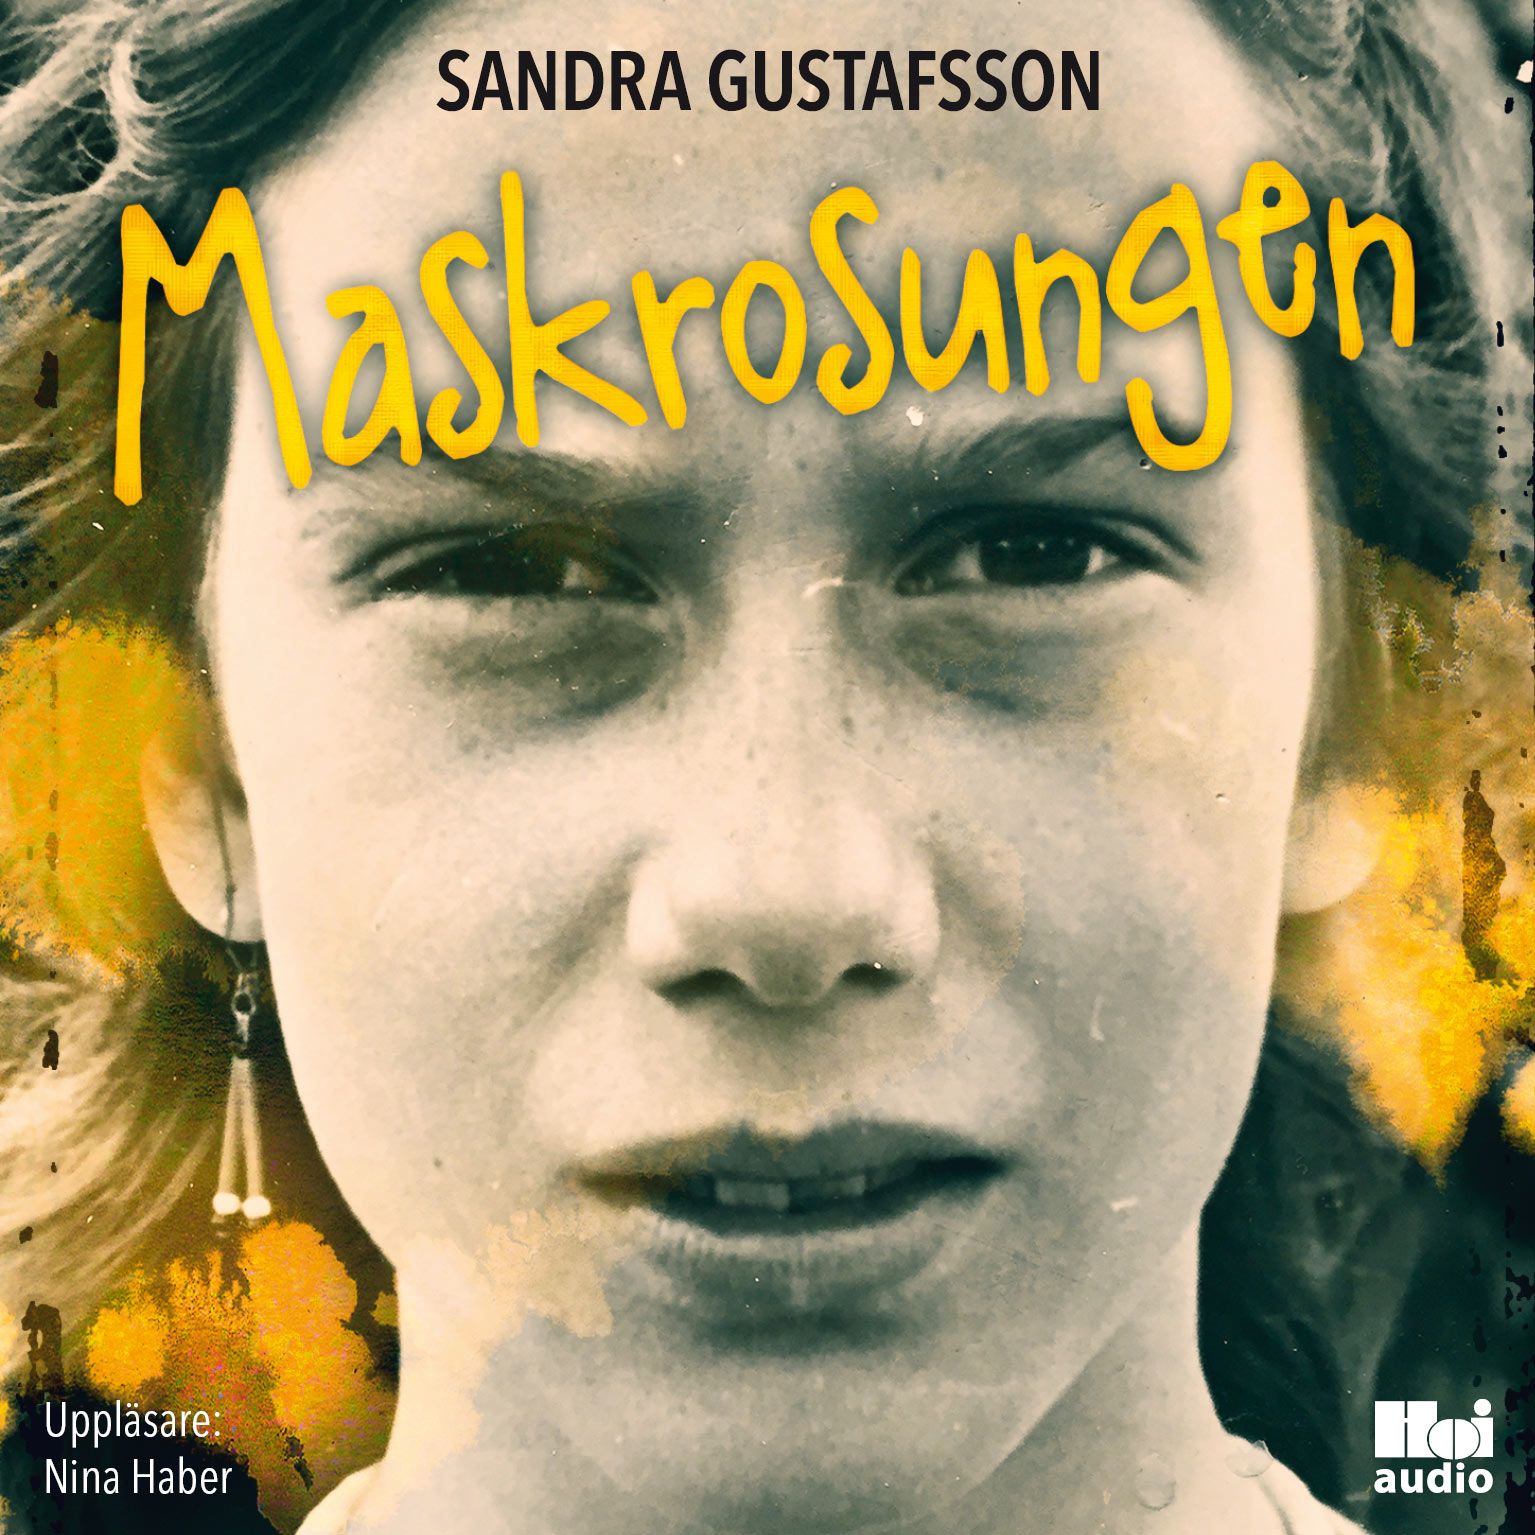 Maskrosungen, audiobook by Sandra Gustafsson